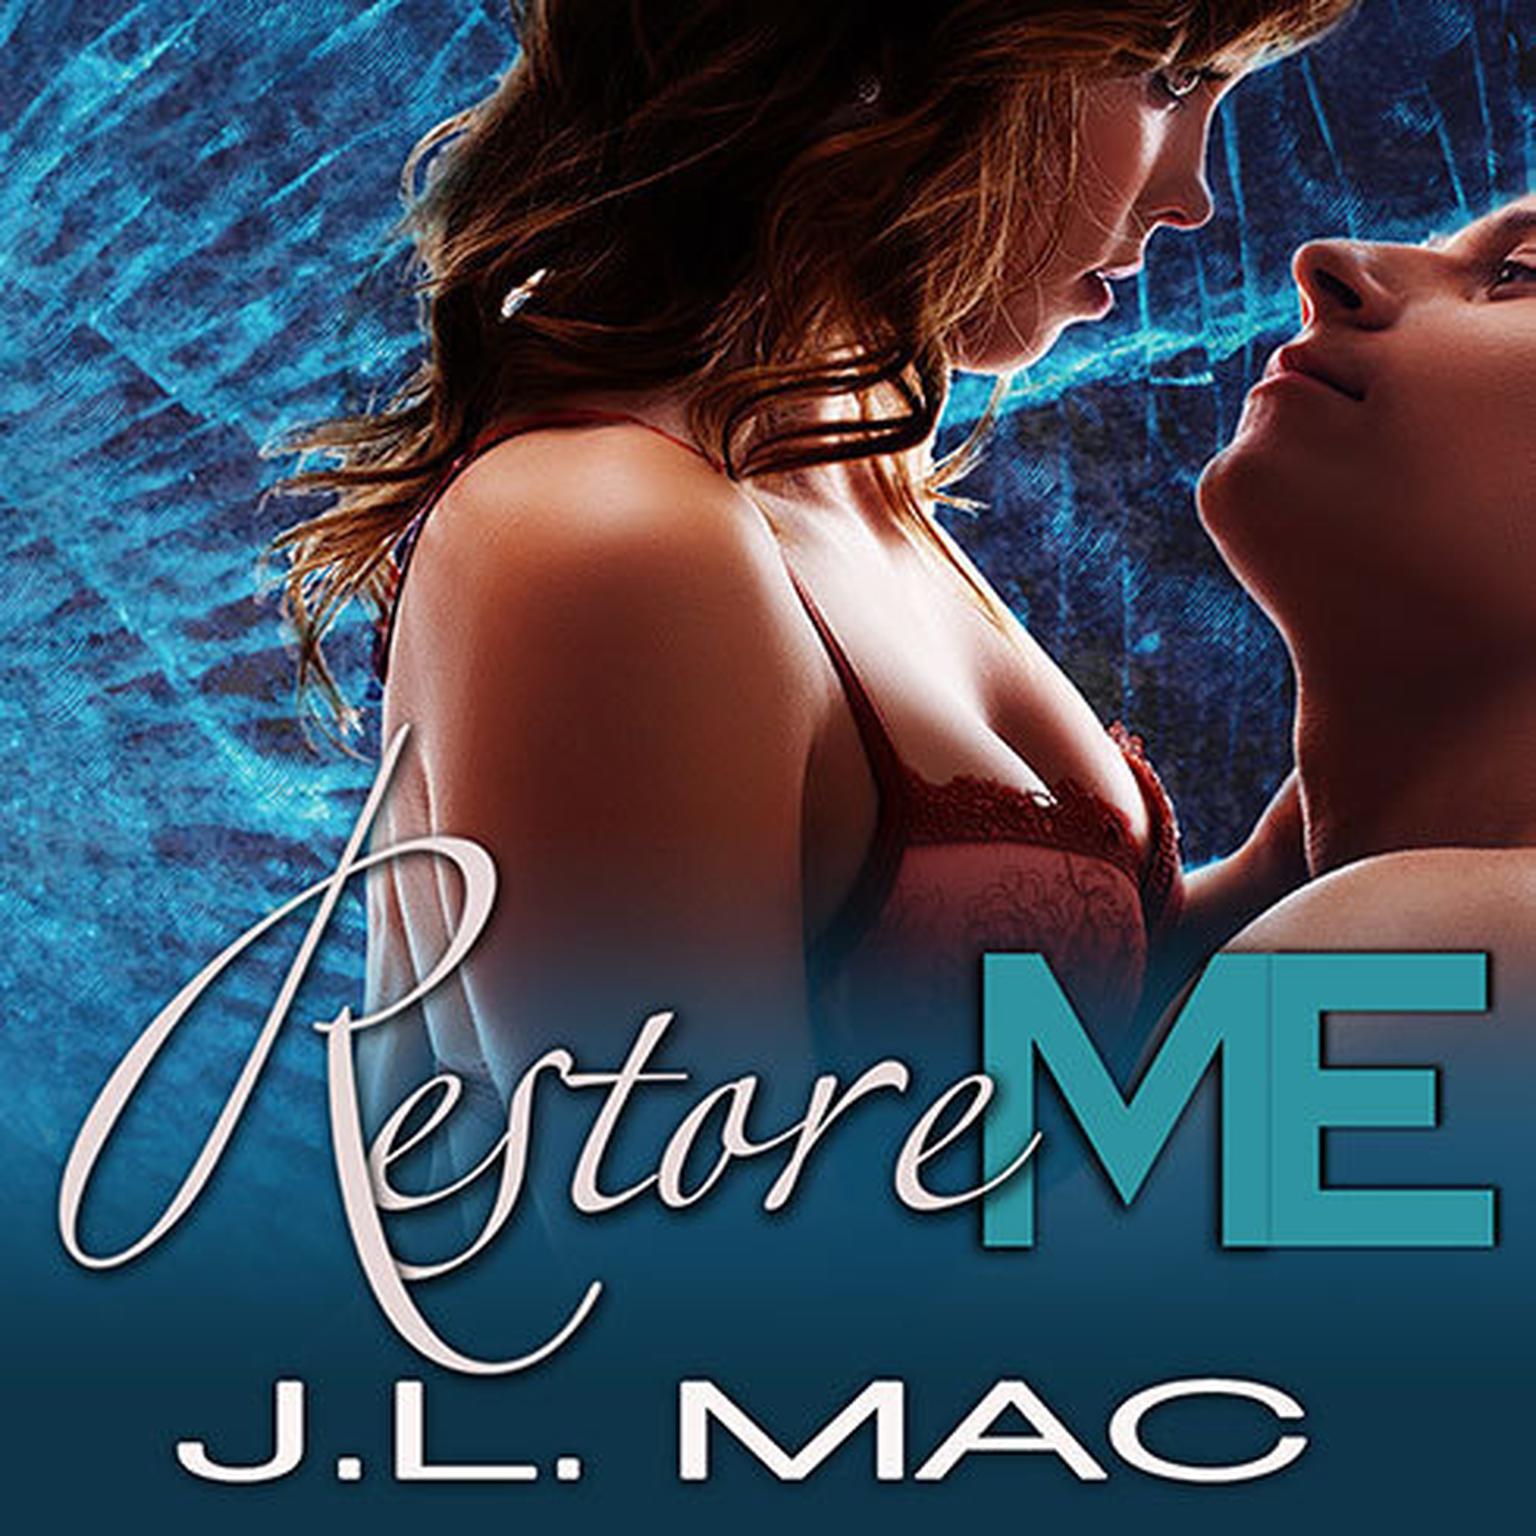 Restore Me Audiobook, by J. L. Mac